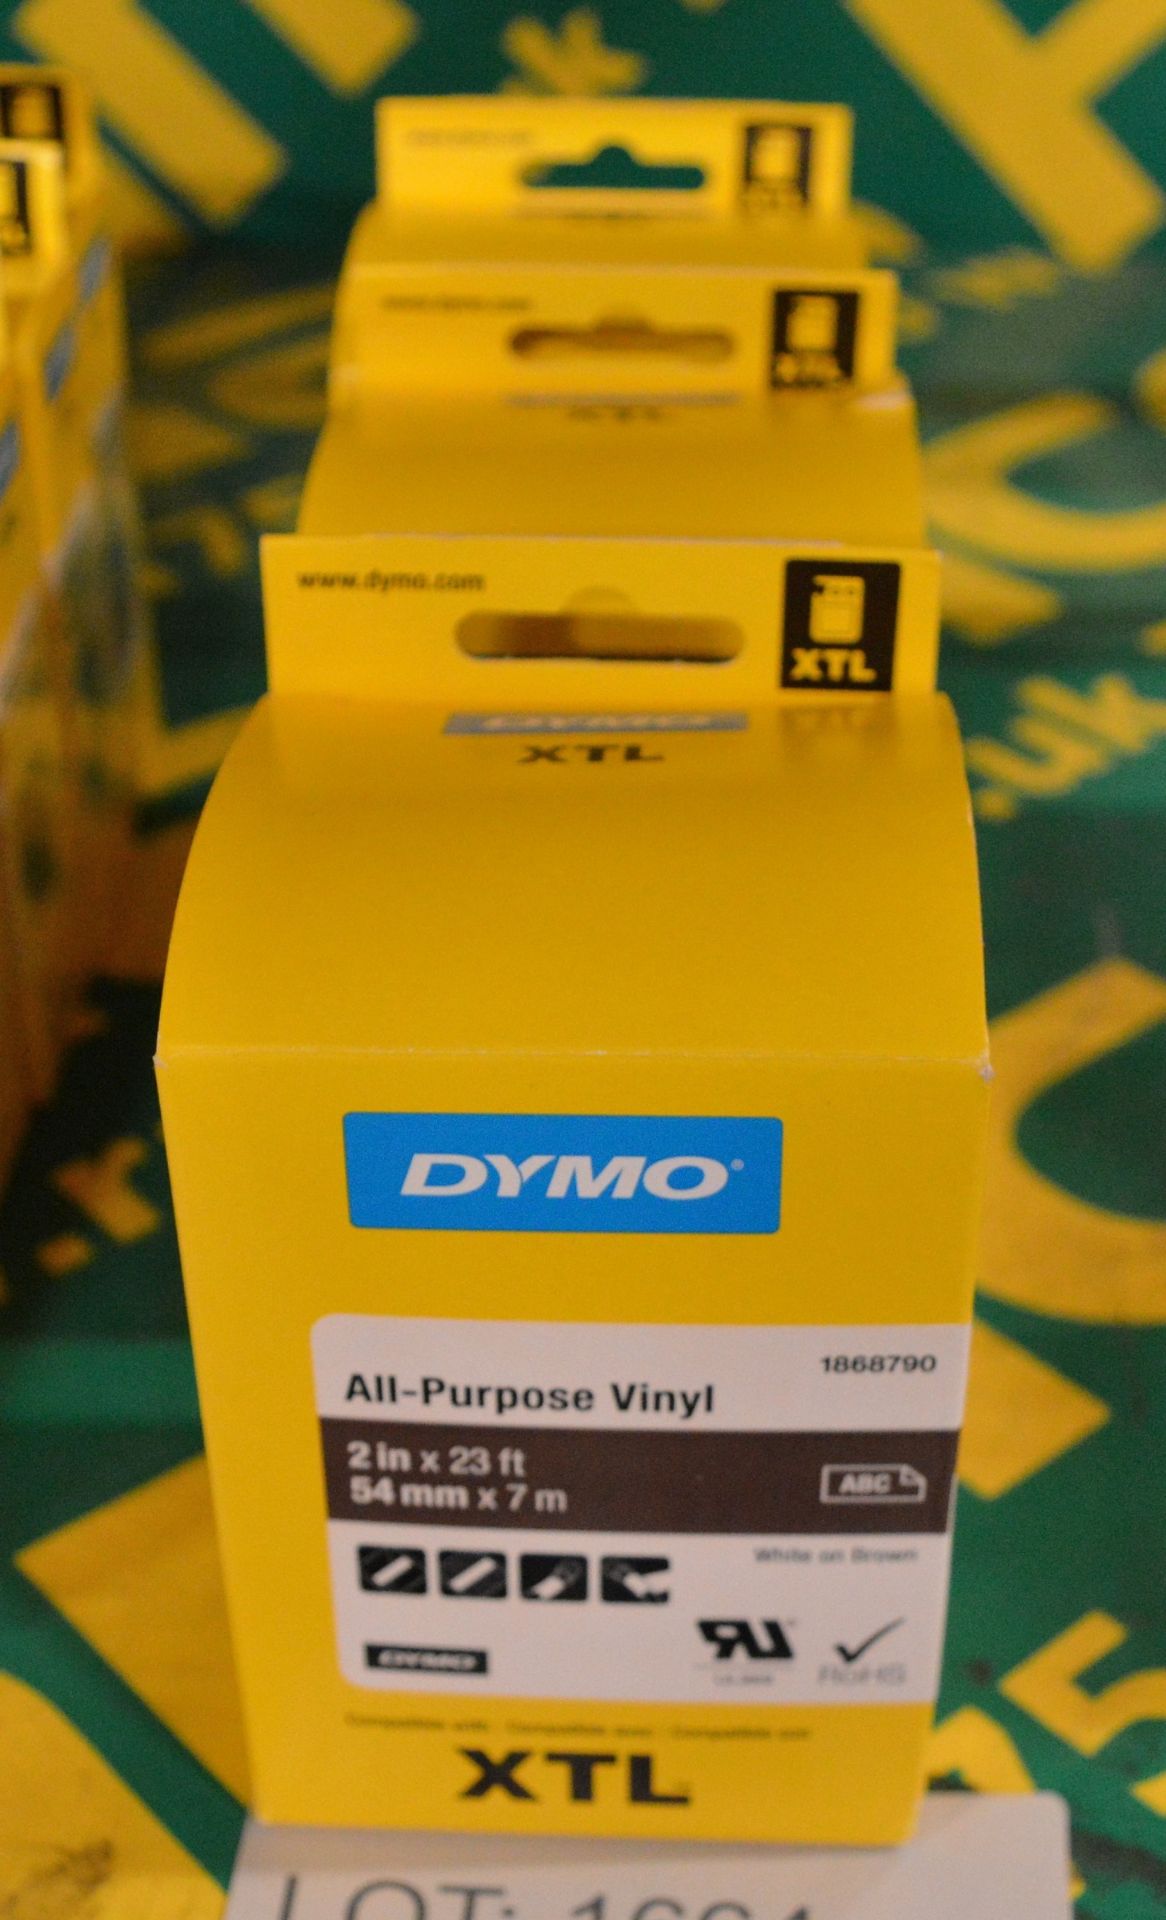 3x Dymo XTL All Purpose Vinyl 2in x 23ft - 54mm x 7m White on Brown Printer Tape